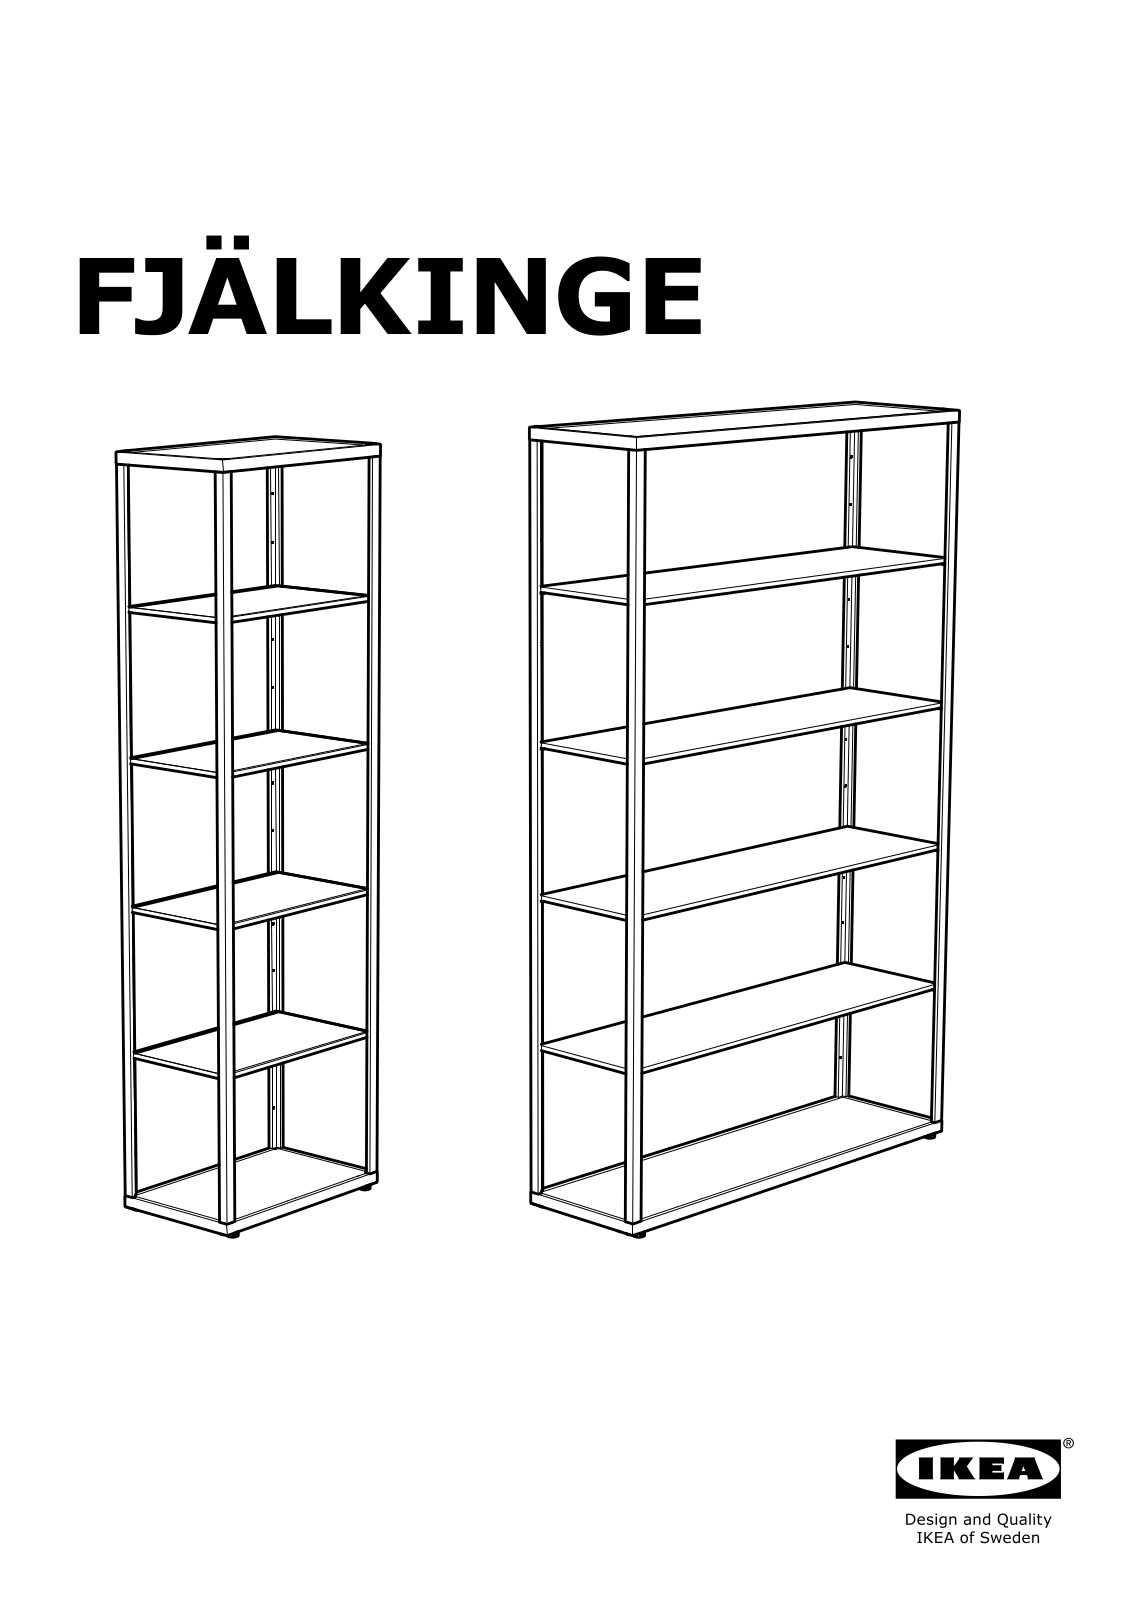 IKEA FJÄLKINGE shelf unit User Manual